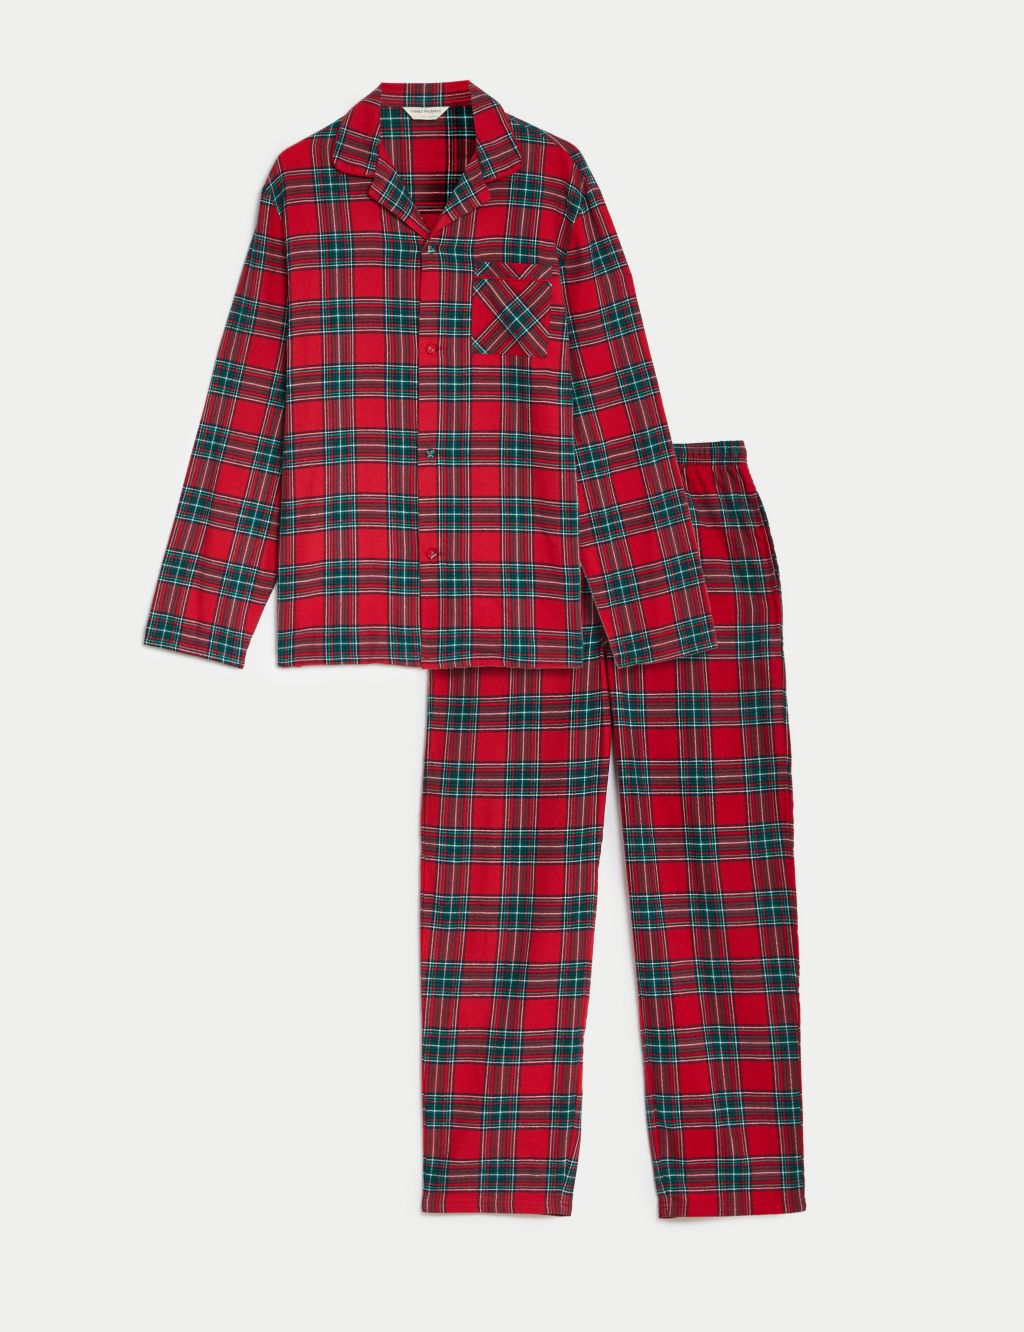 Men's Checked Family Christmas Pyjama Set image 2